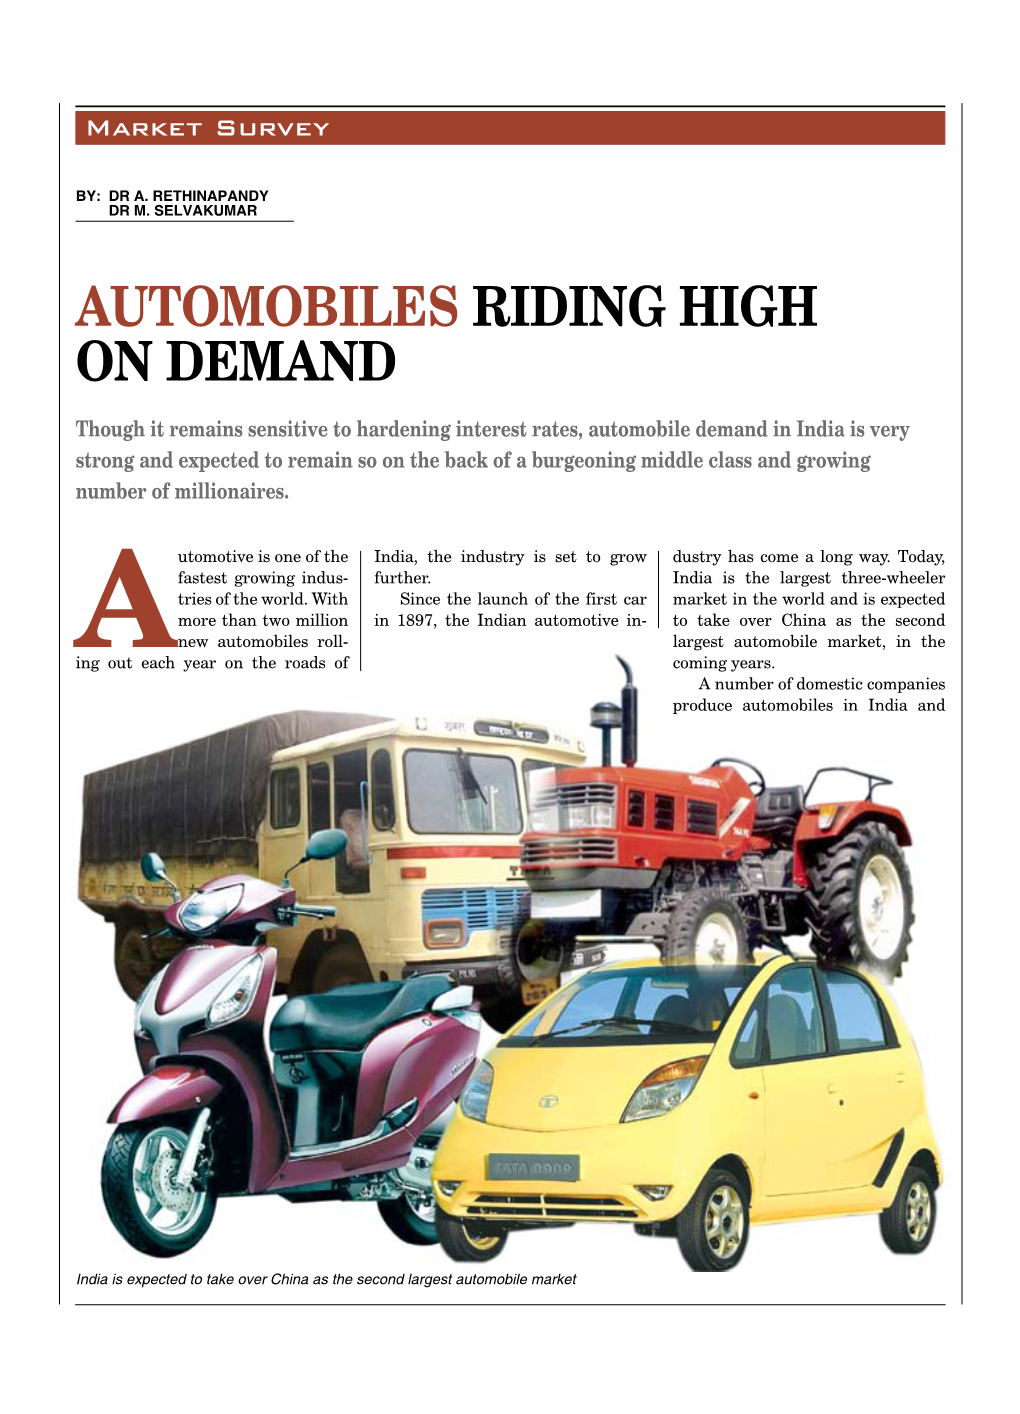 Automobiles Riding High on Demand